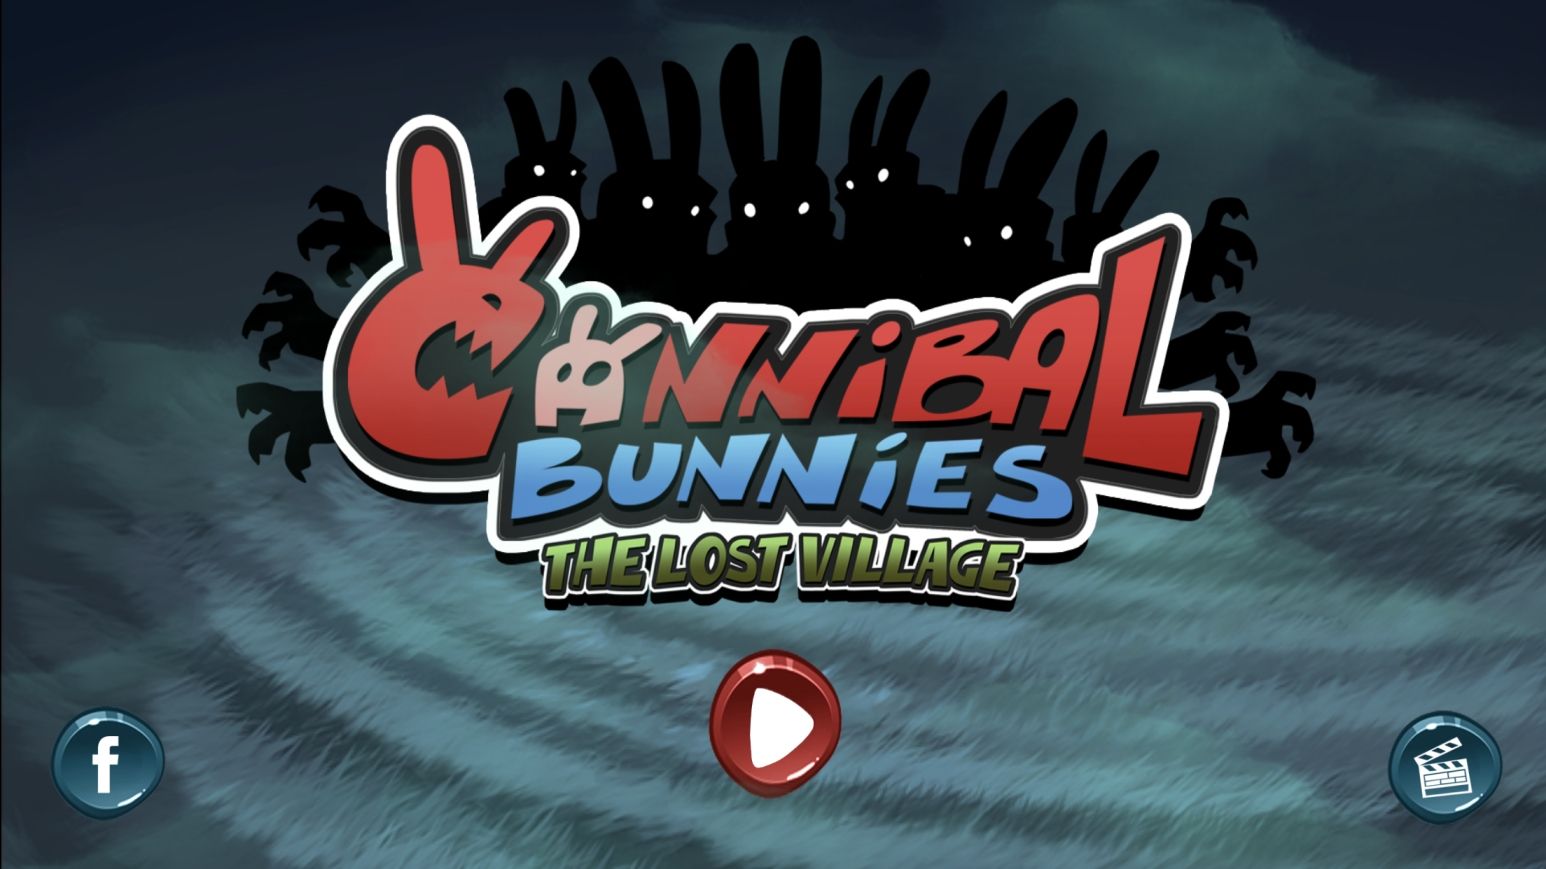 Cannibal Bunnies 2 (copie d'écran 1 sur iPhone / iPad)